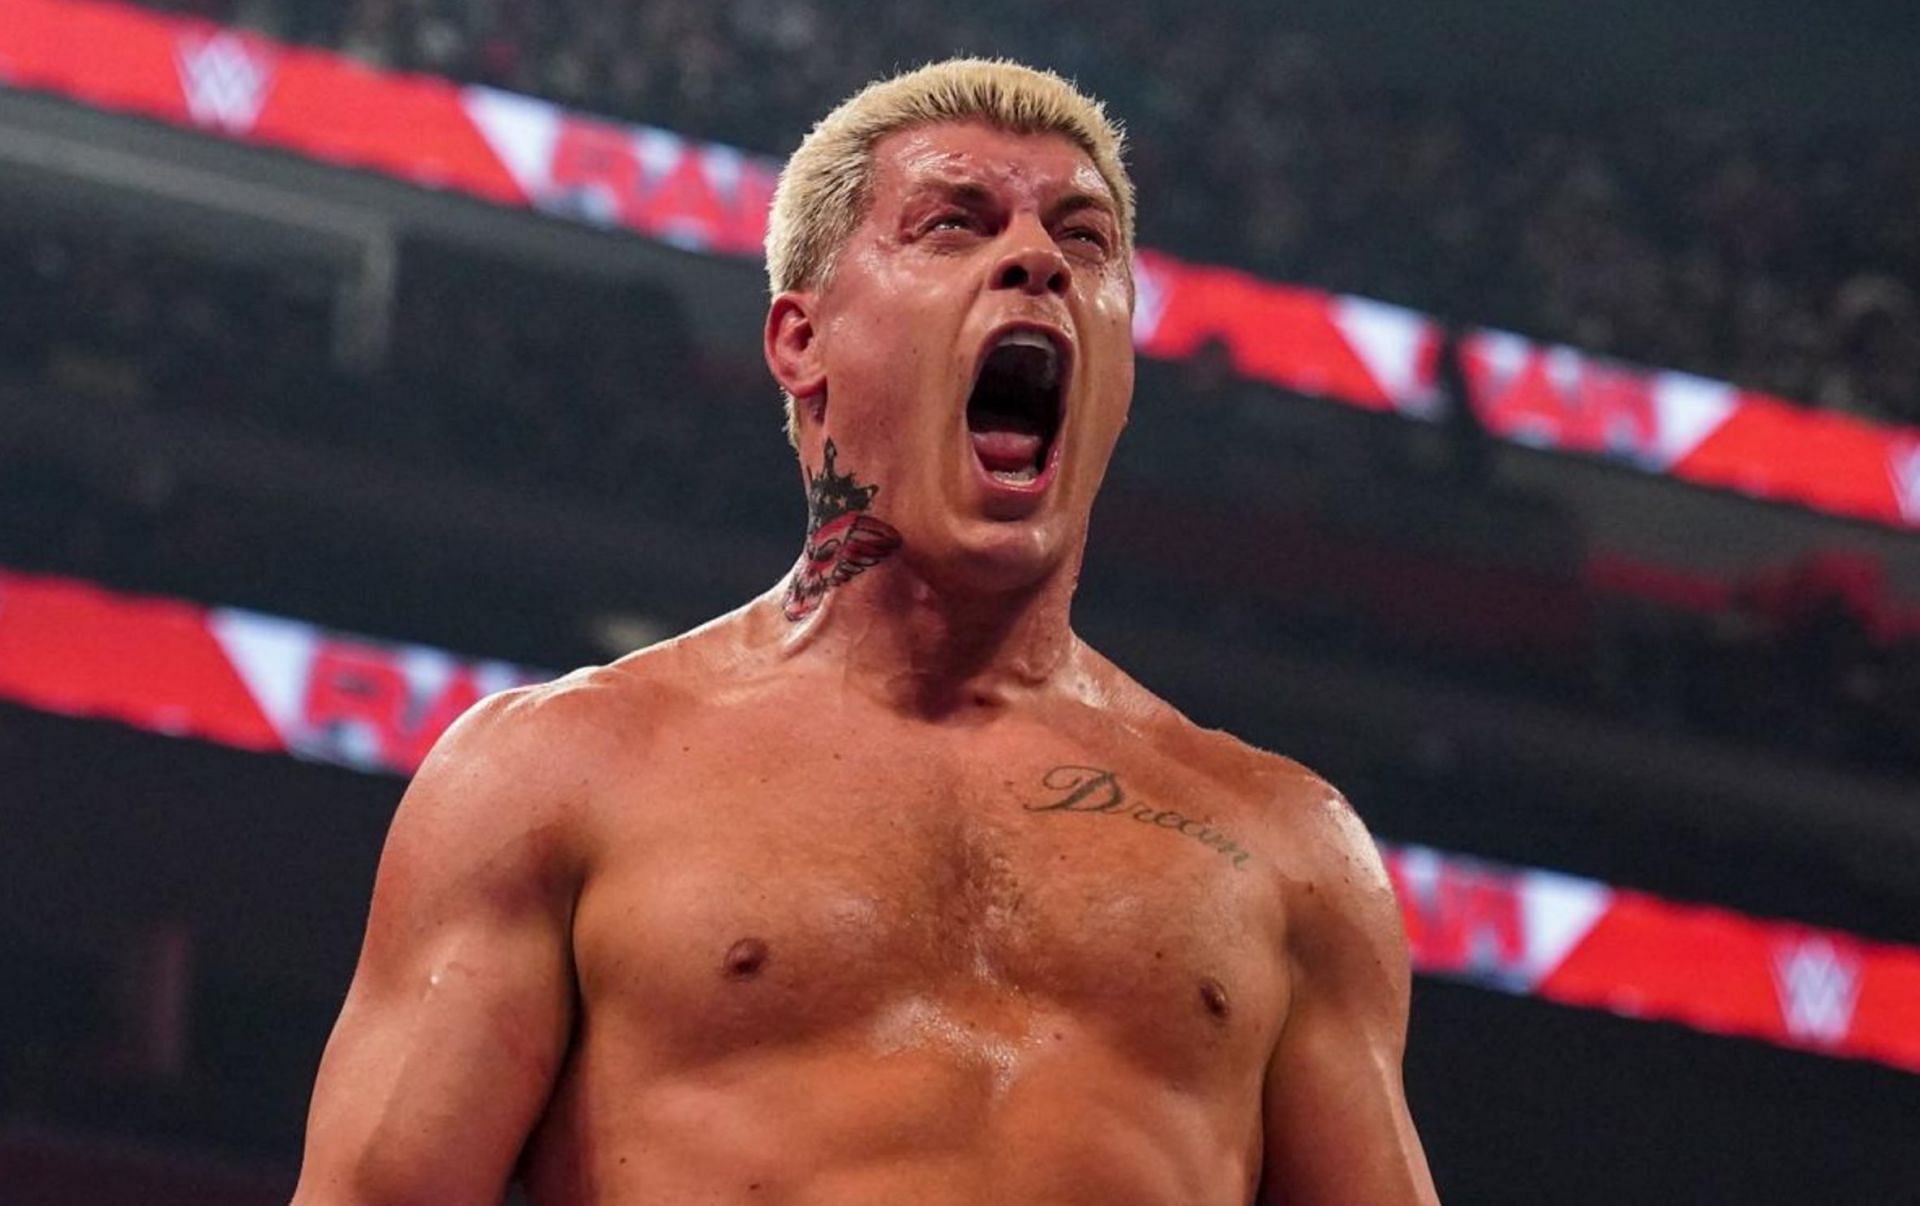 Cody Rhodes overcame The Miz this week on RAW